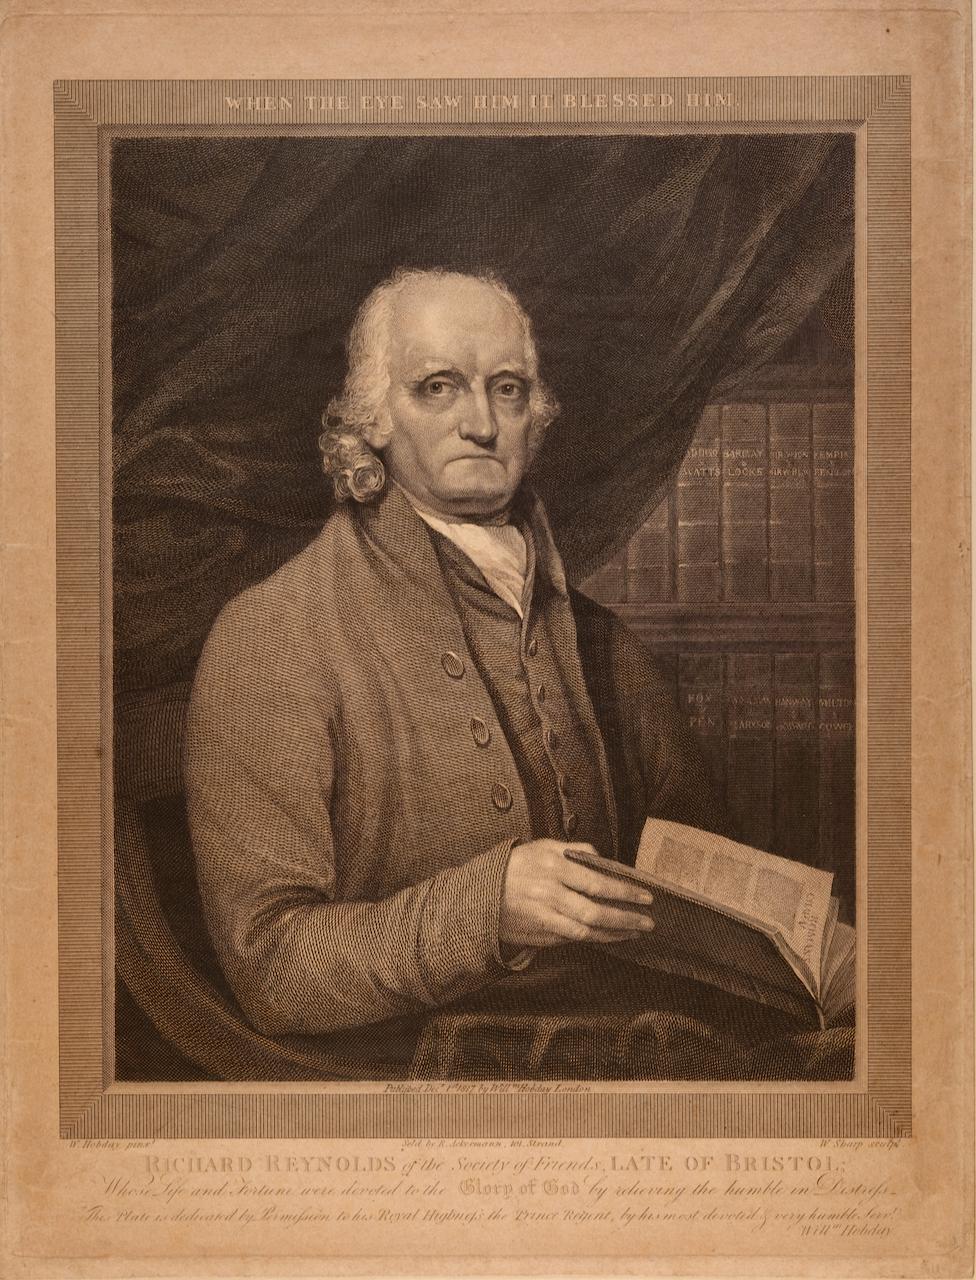 Richard Reynolds, Society of Friends: 19th C. Engraved Portrait by Wm. Sharp - Print by William Sharp